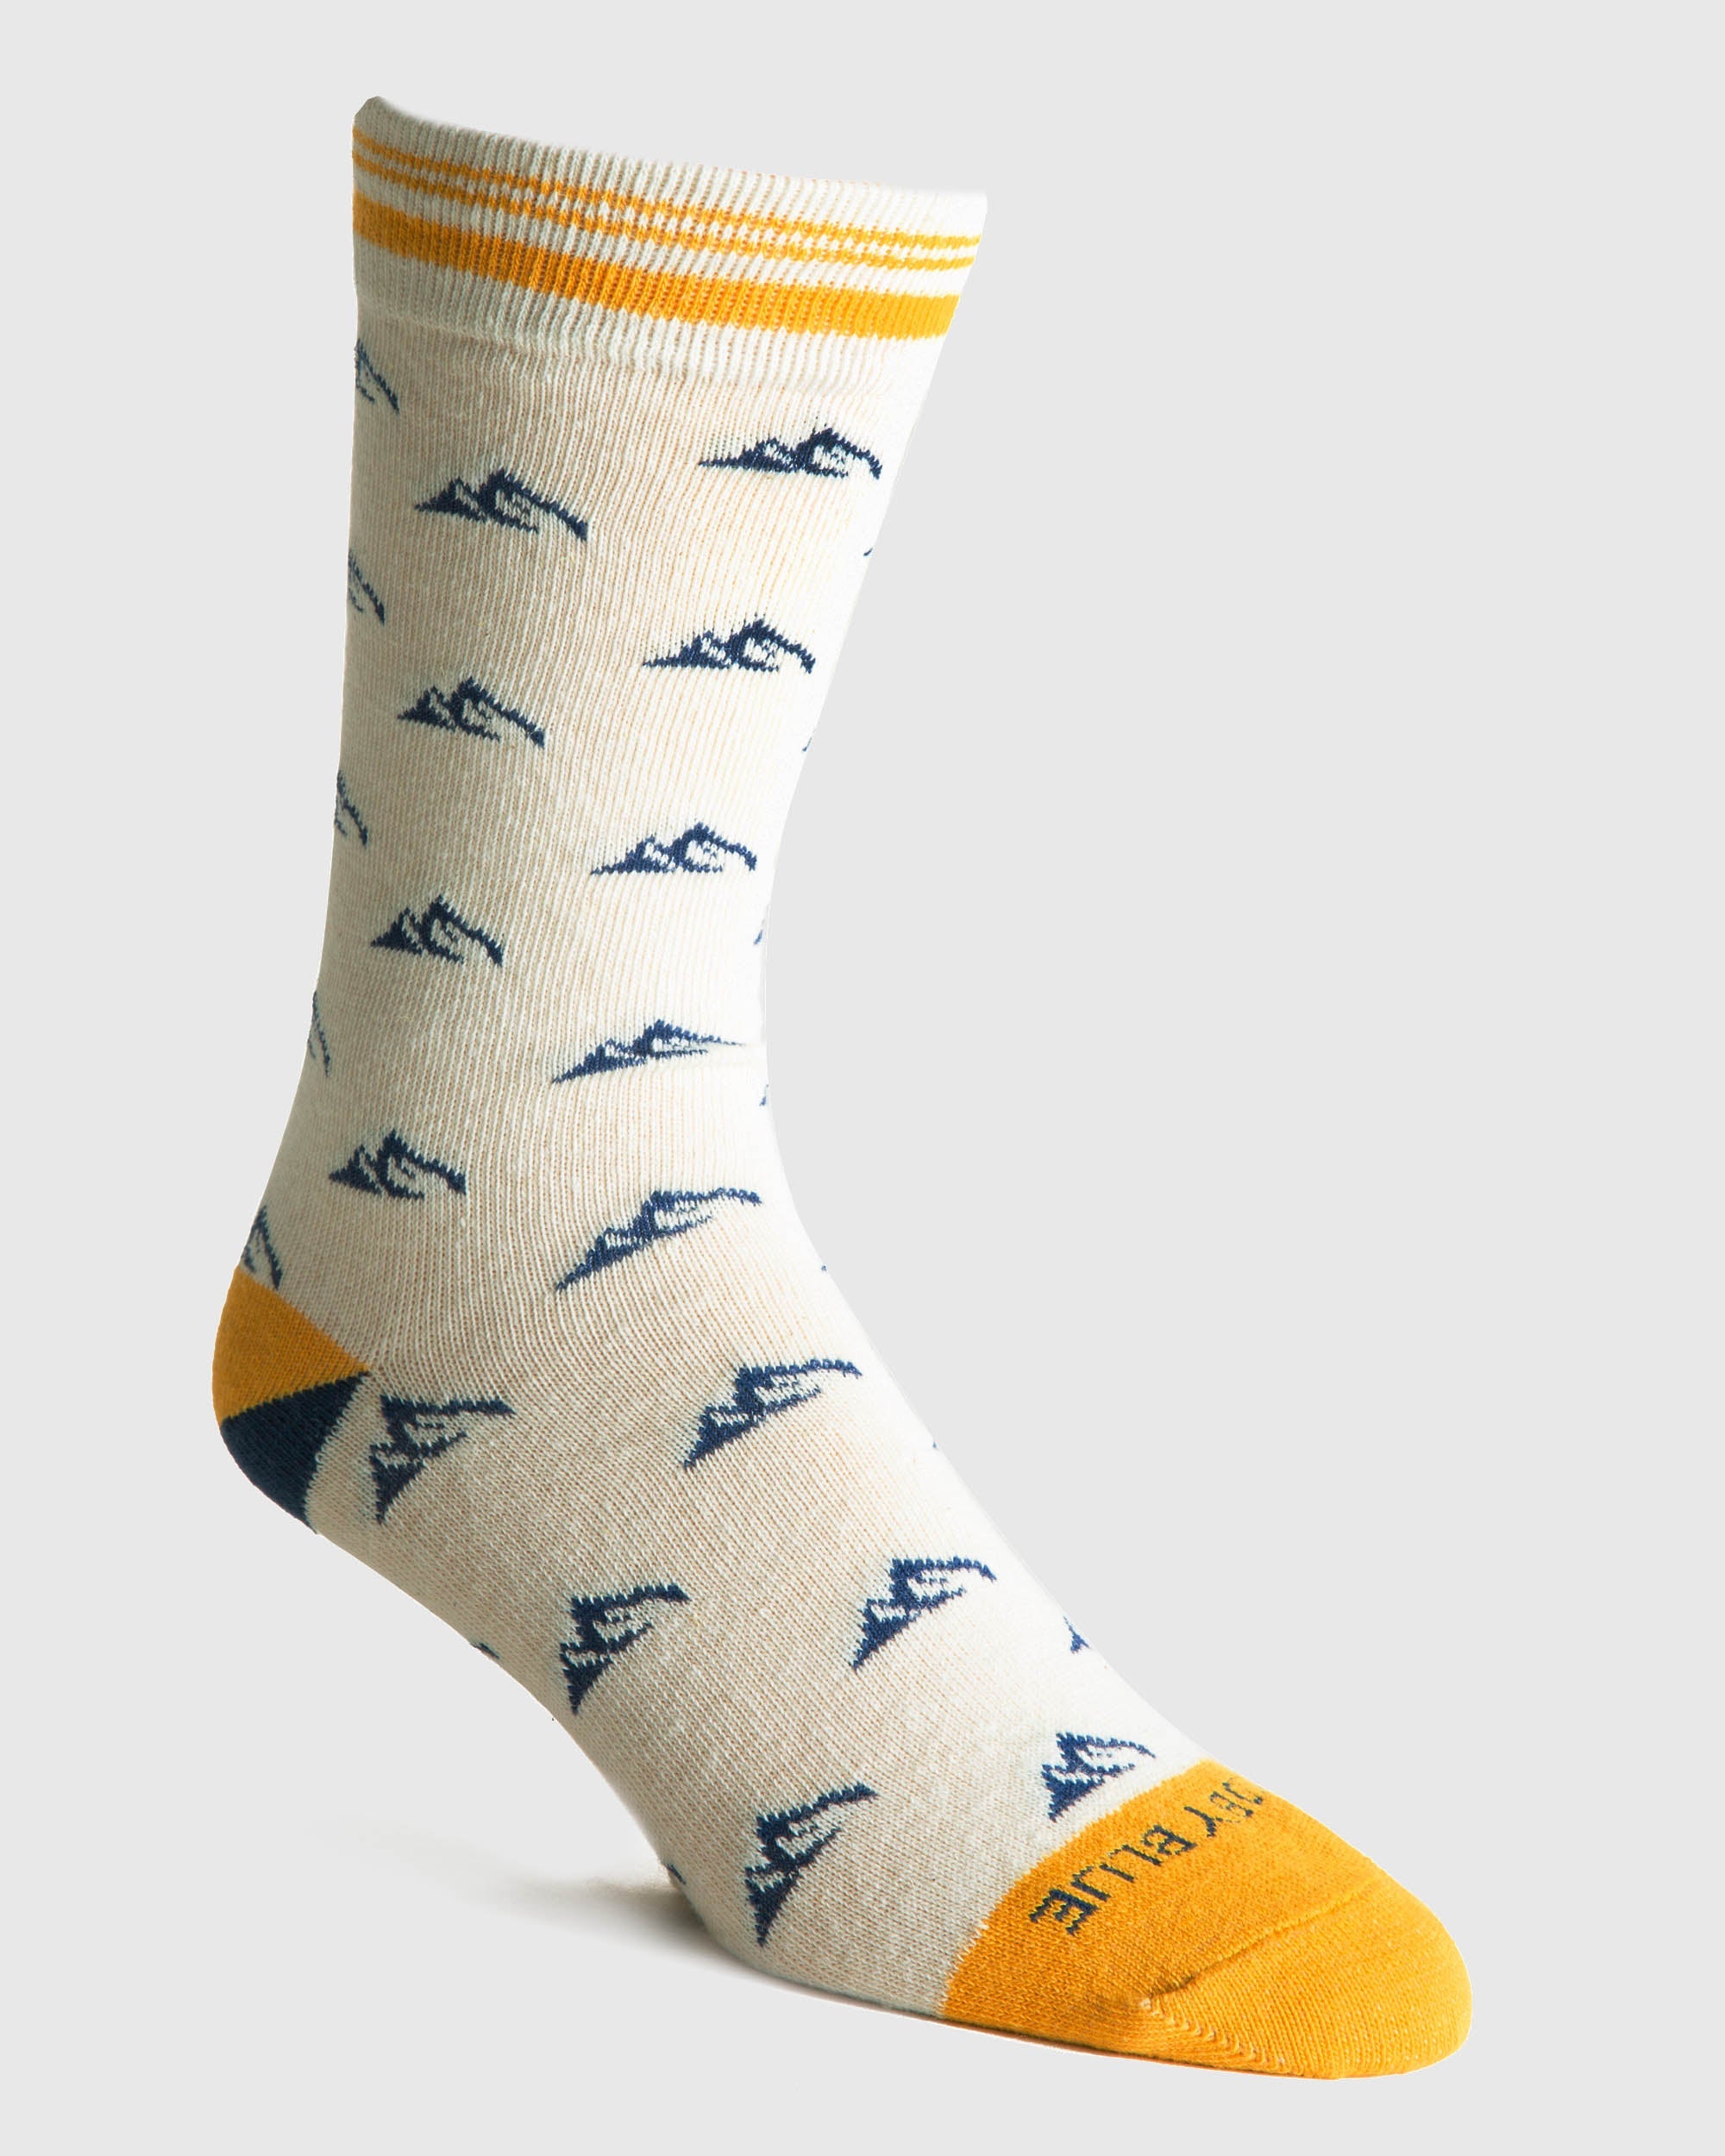 Printed SoftHemp™ Sock